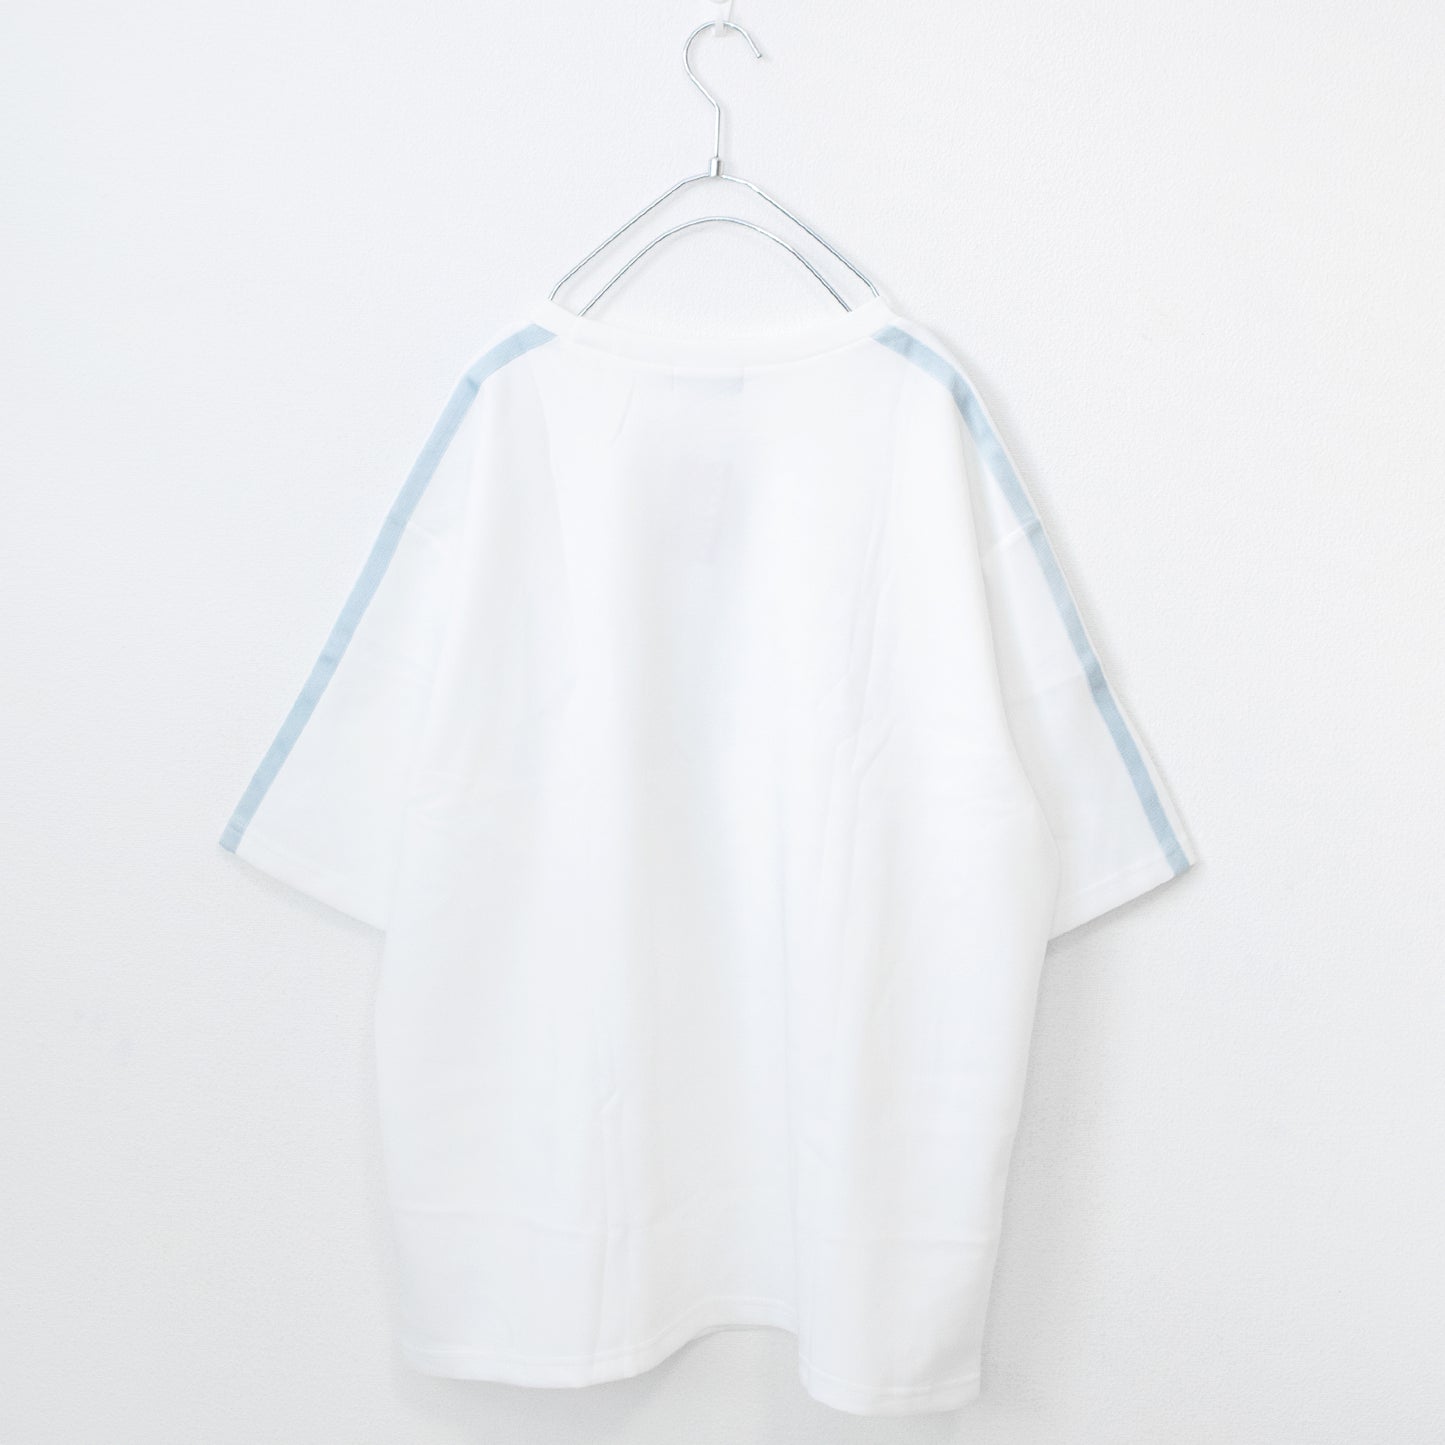 ACDC RAG ドットネコ 半袖Tシャツ WHITE